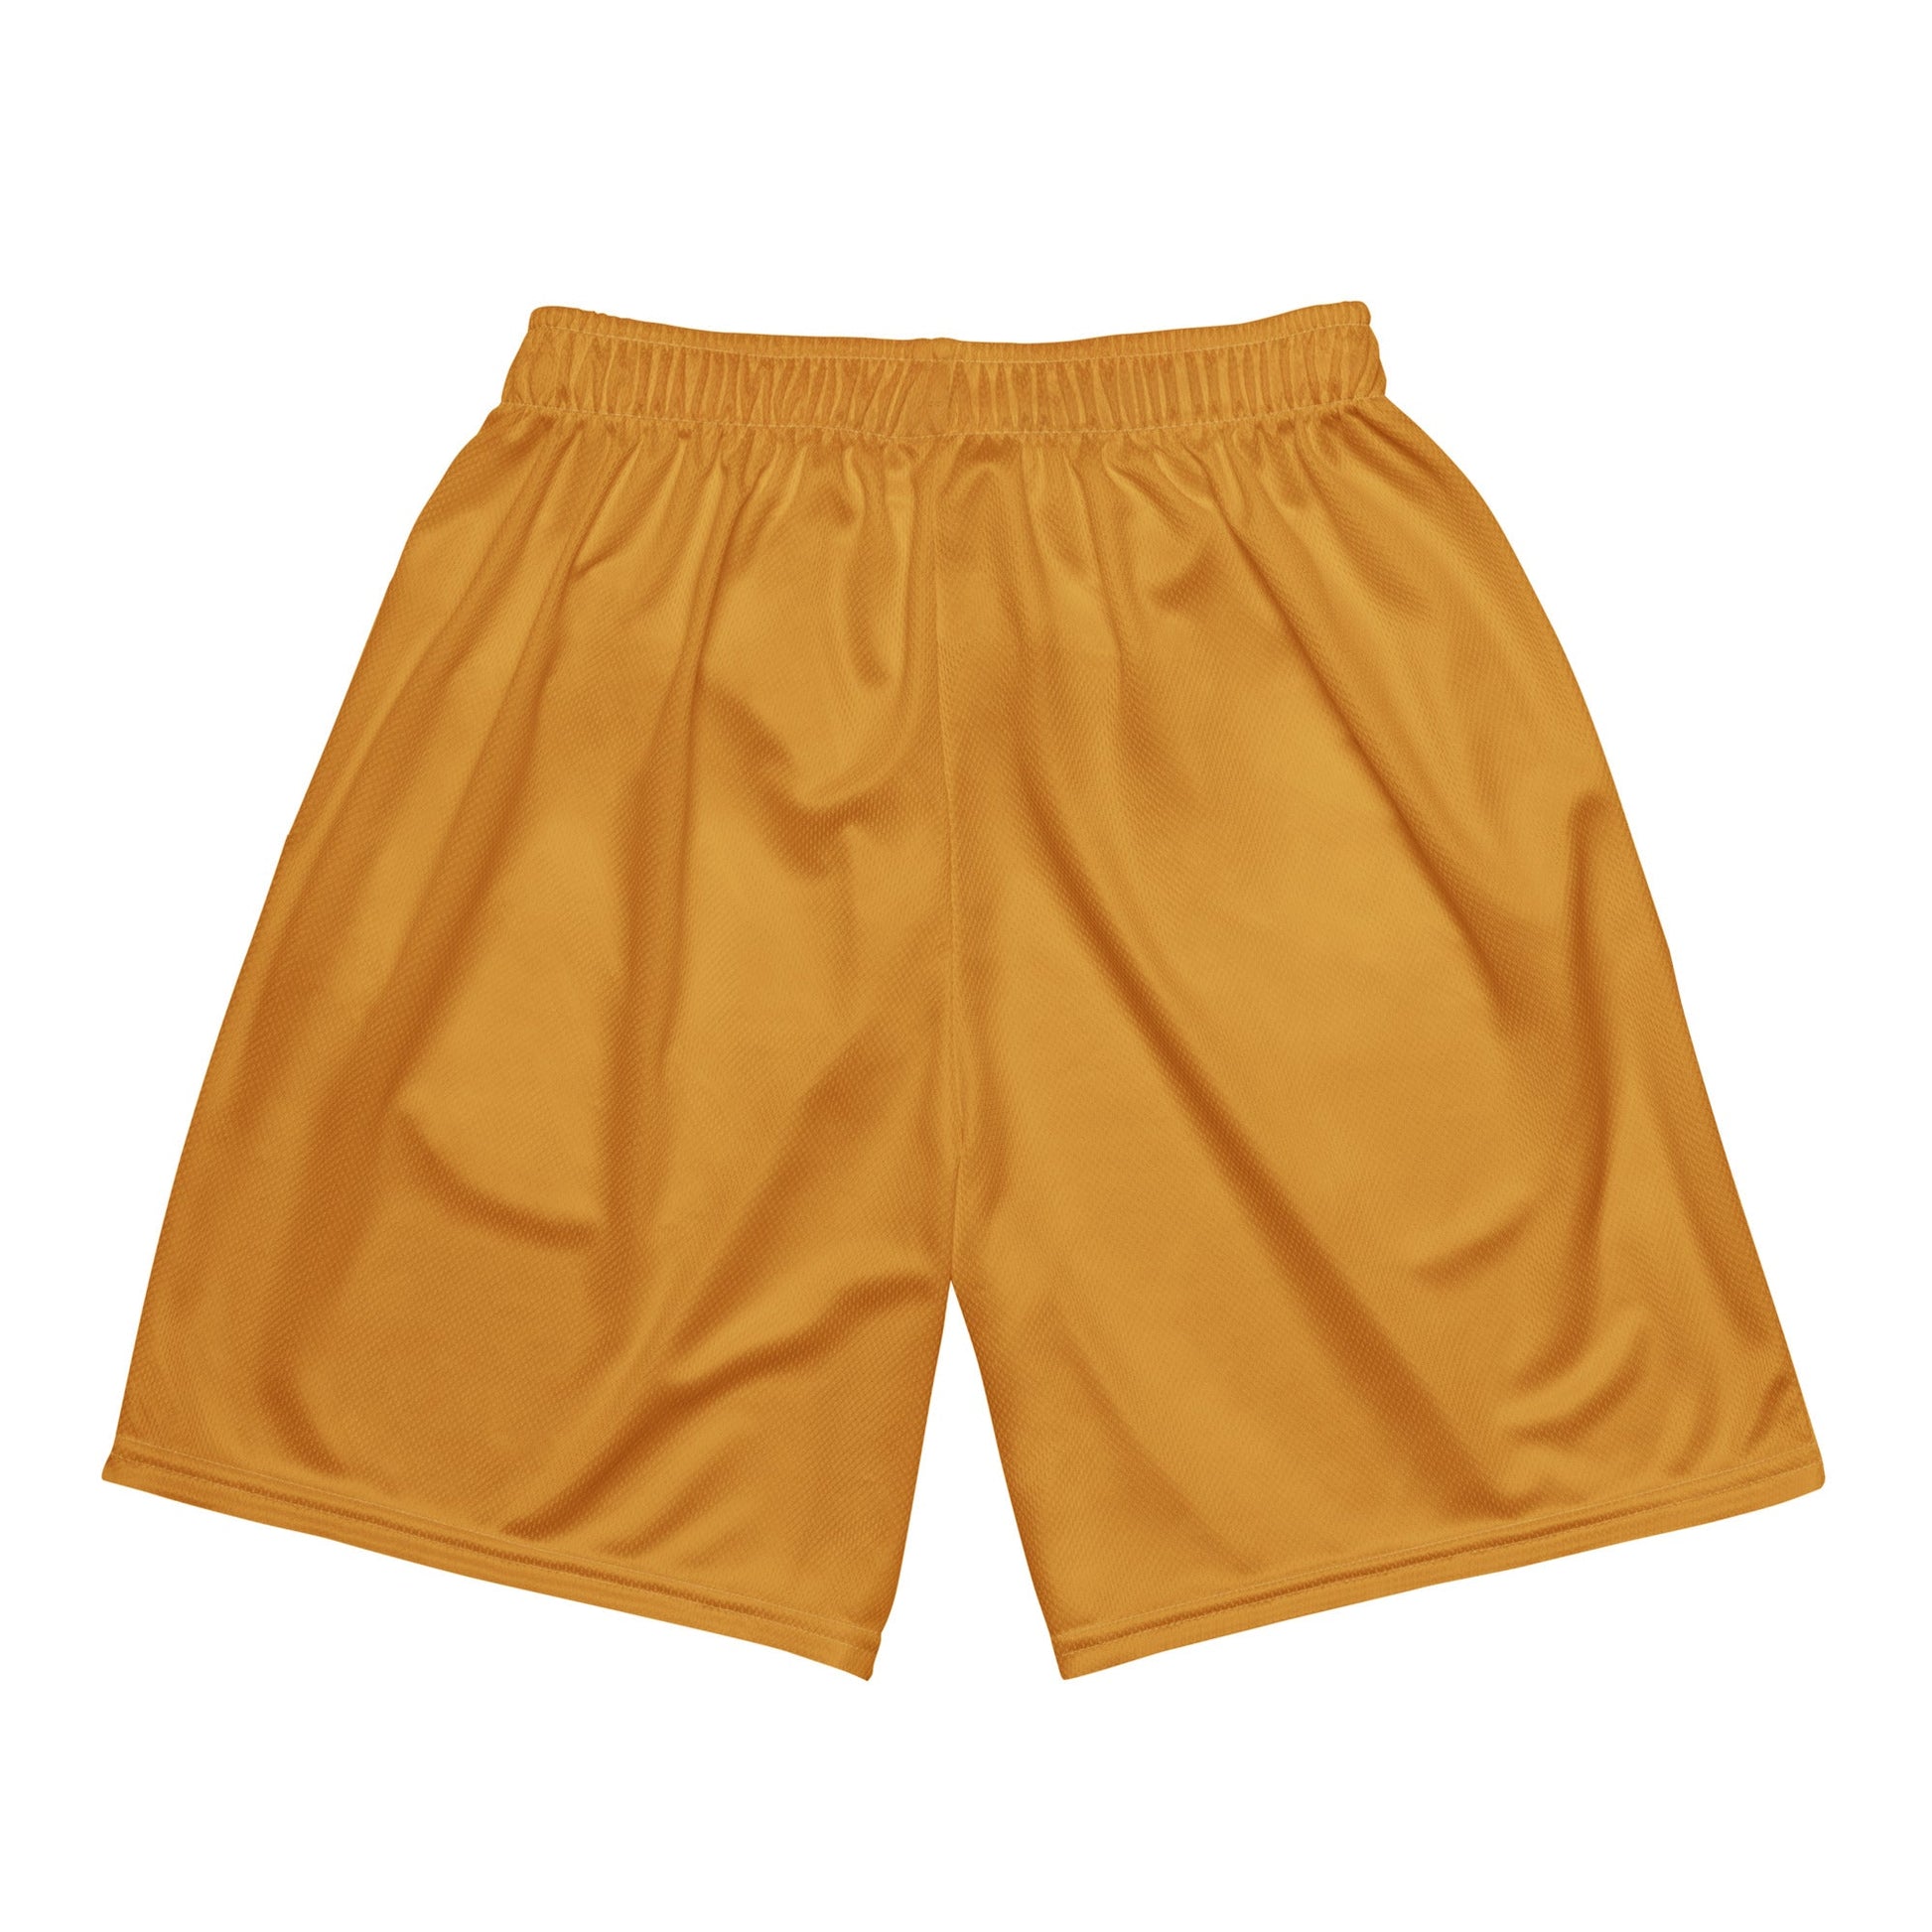 Goldenrod Recycled Unisex Comfort Mesh Hiking Shorts - Appalachian Bittersweet - Shorts